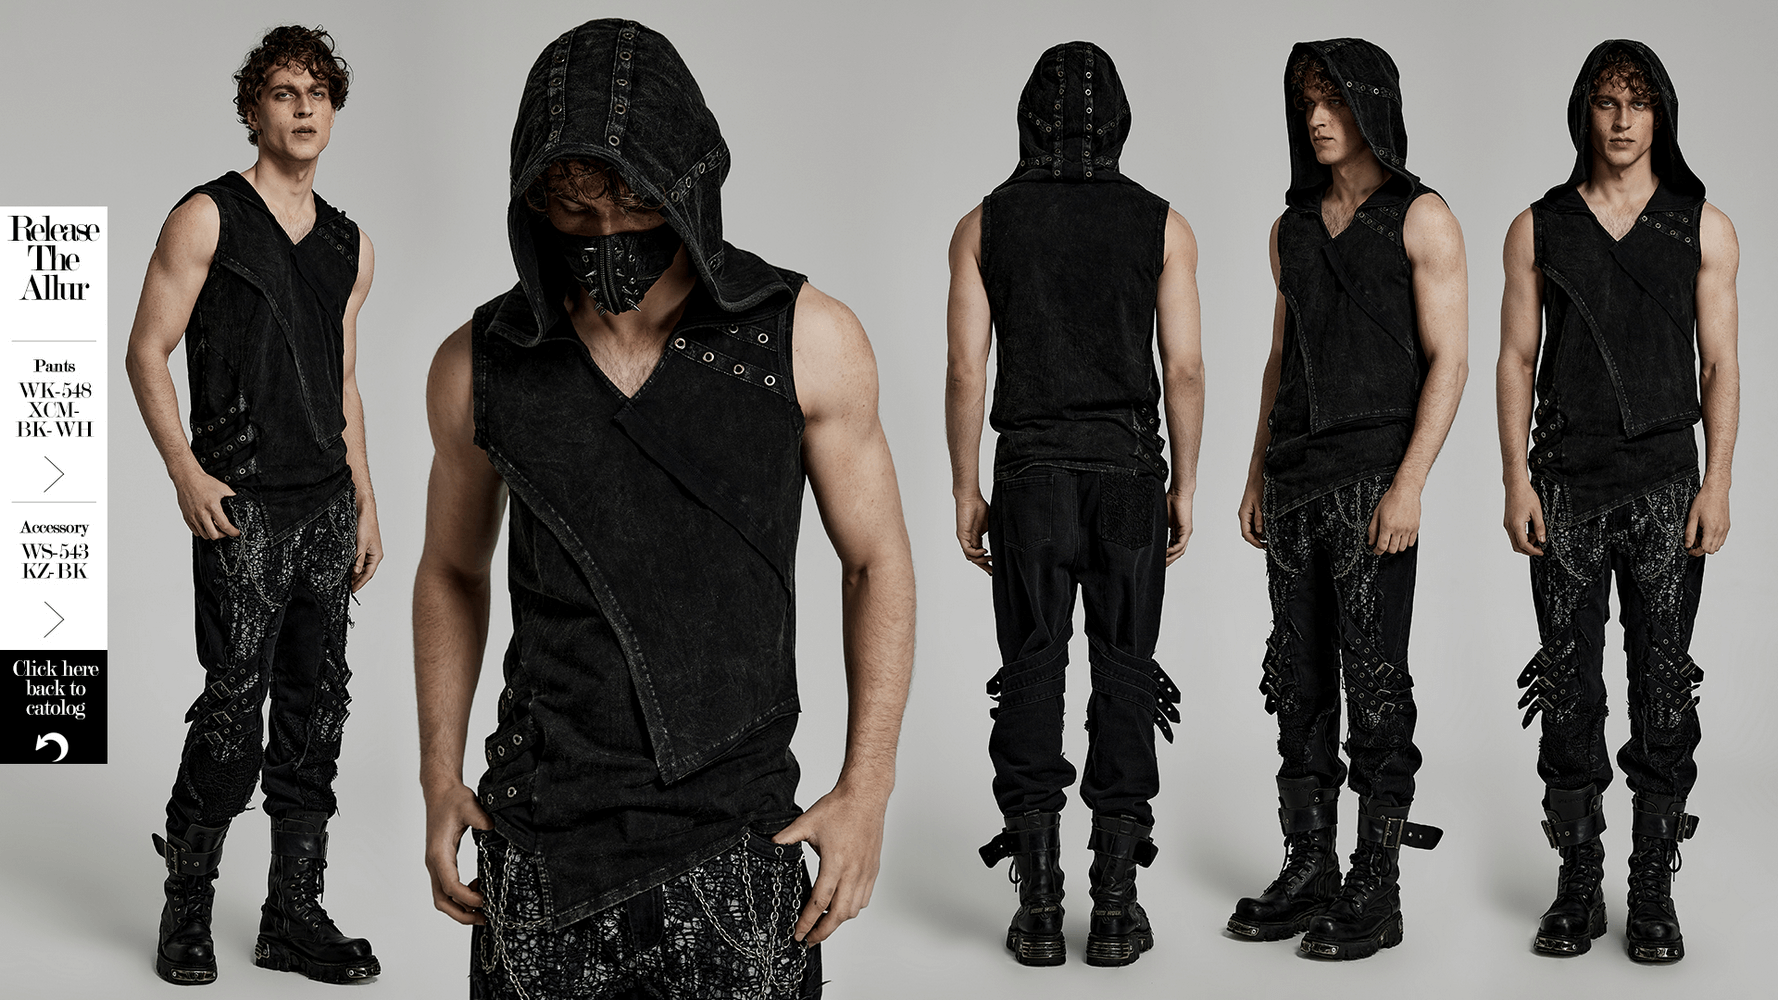 Fashion Punk Rave Men's Elio Distressed Hooded Vest